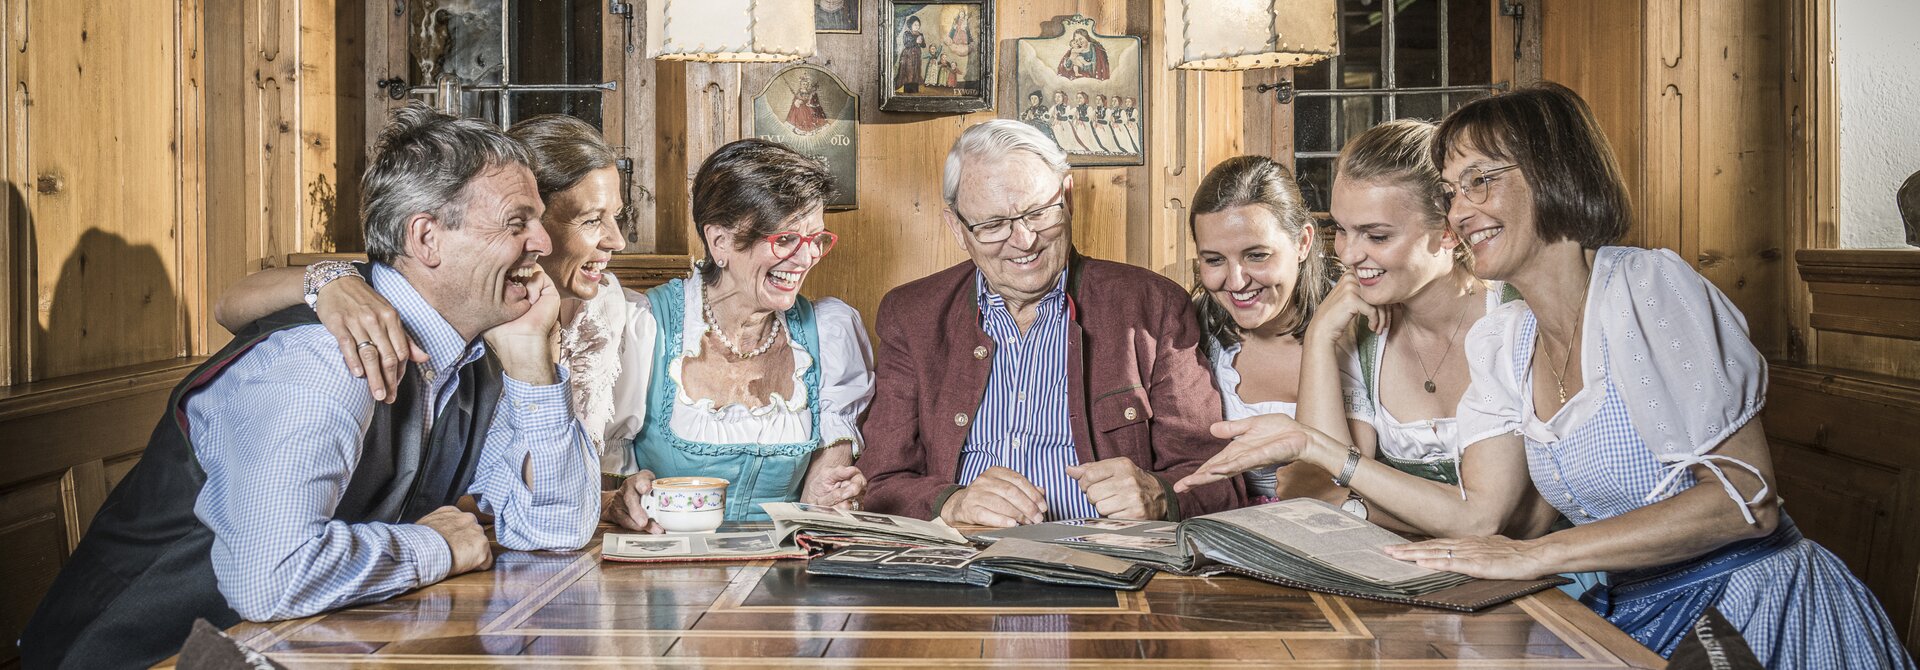 Gastgeberfamilie | Best Alpine Wellnesshotel Theresa, Tirol